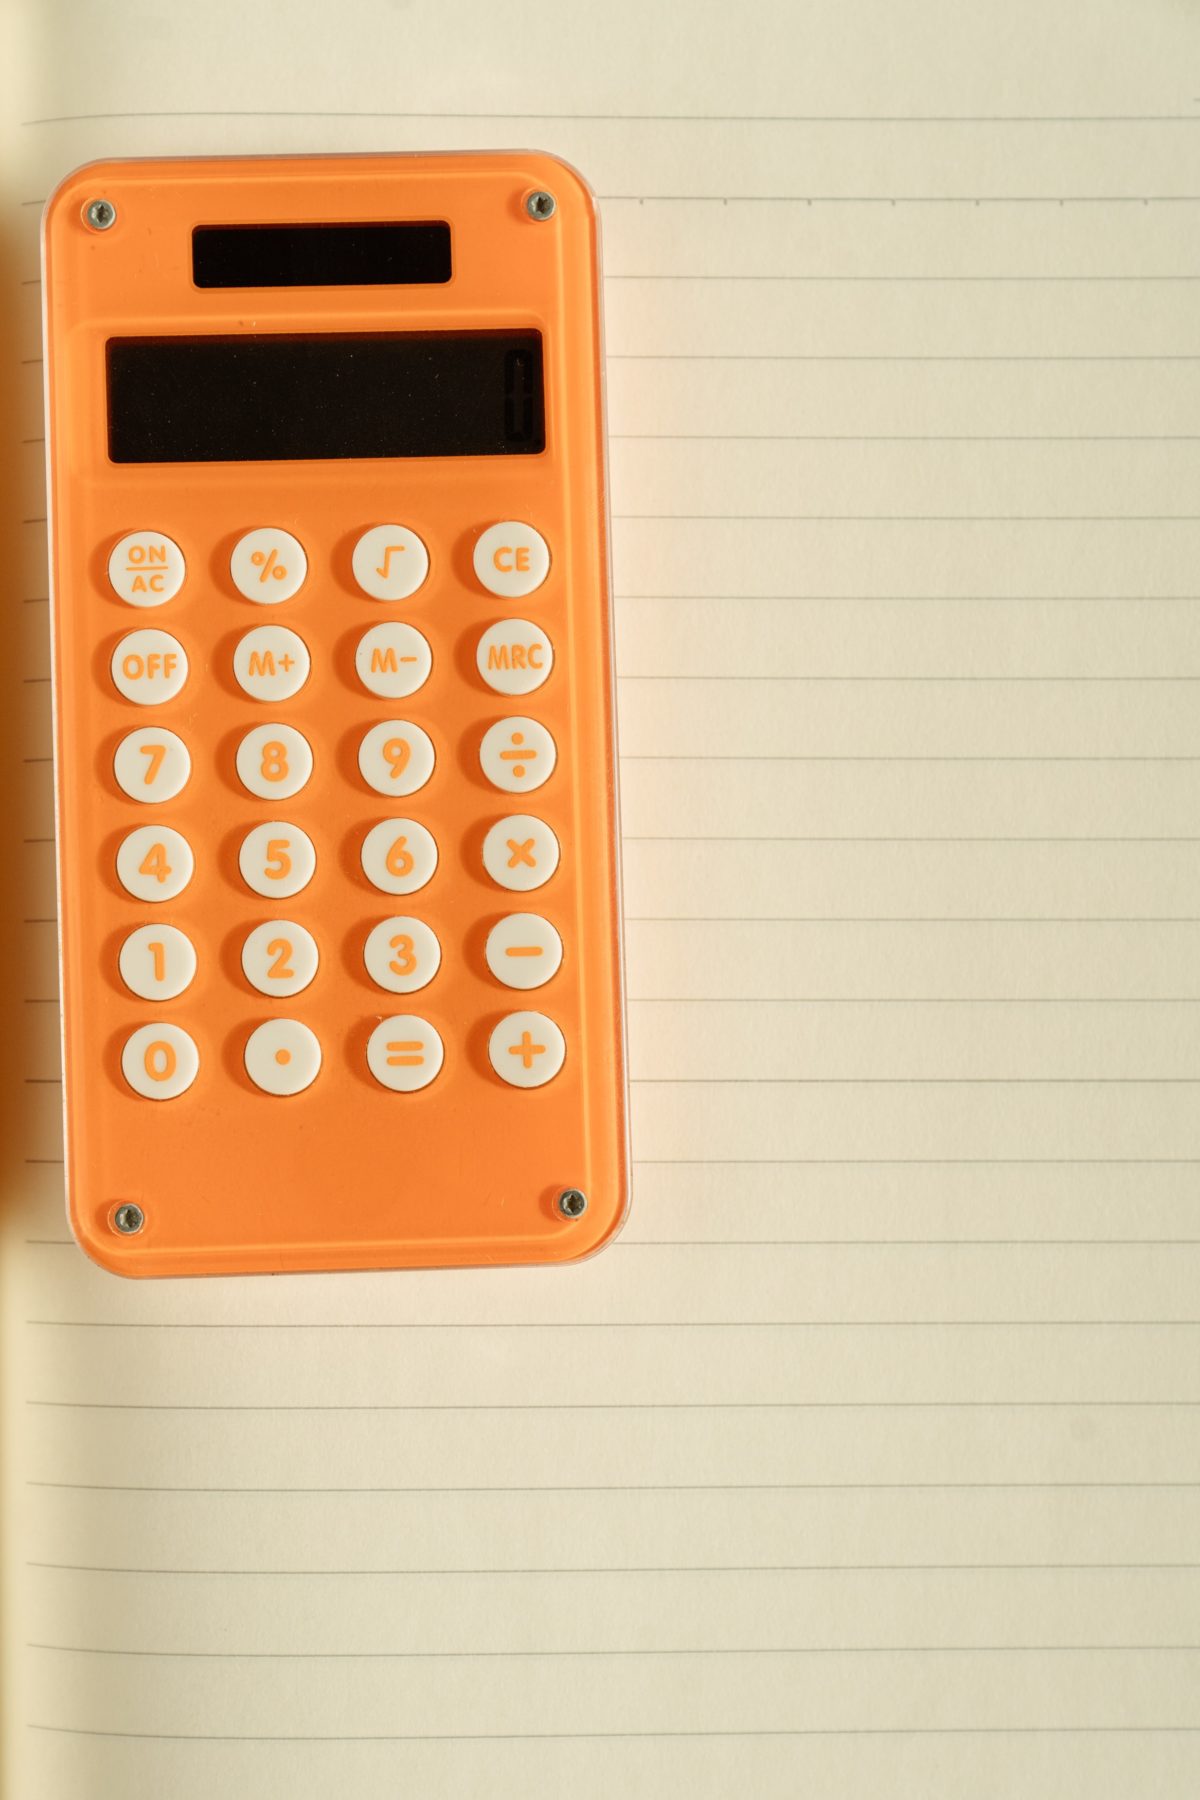 Orange calculator on a note pad.